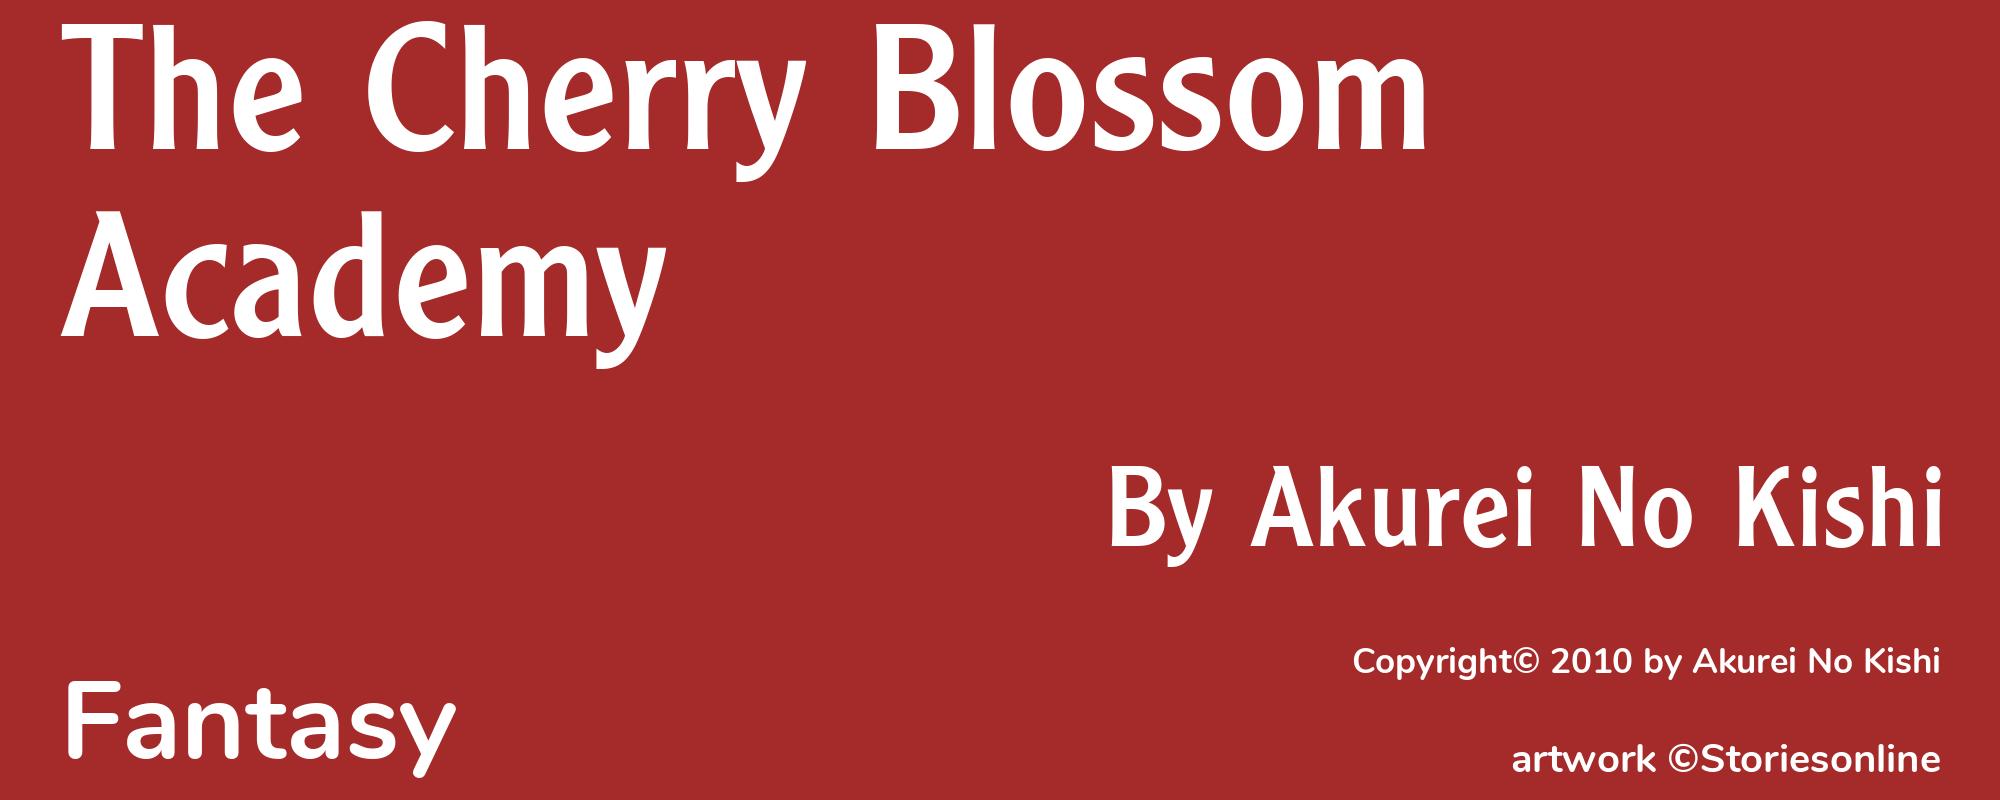 The Cherry Blossom Academy - Cover